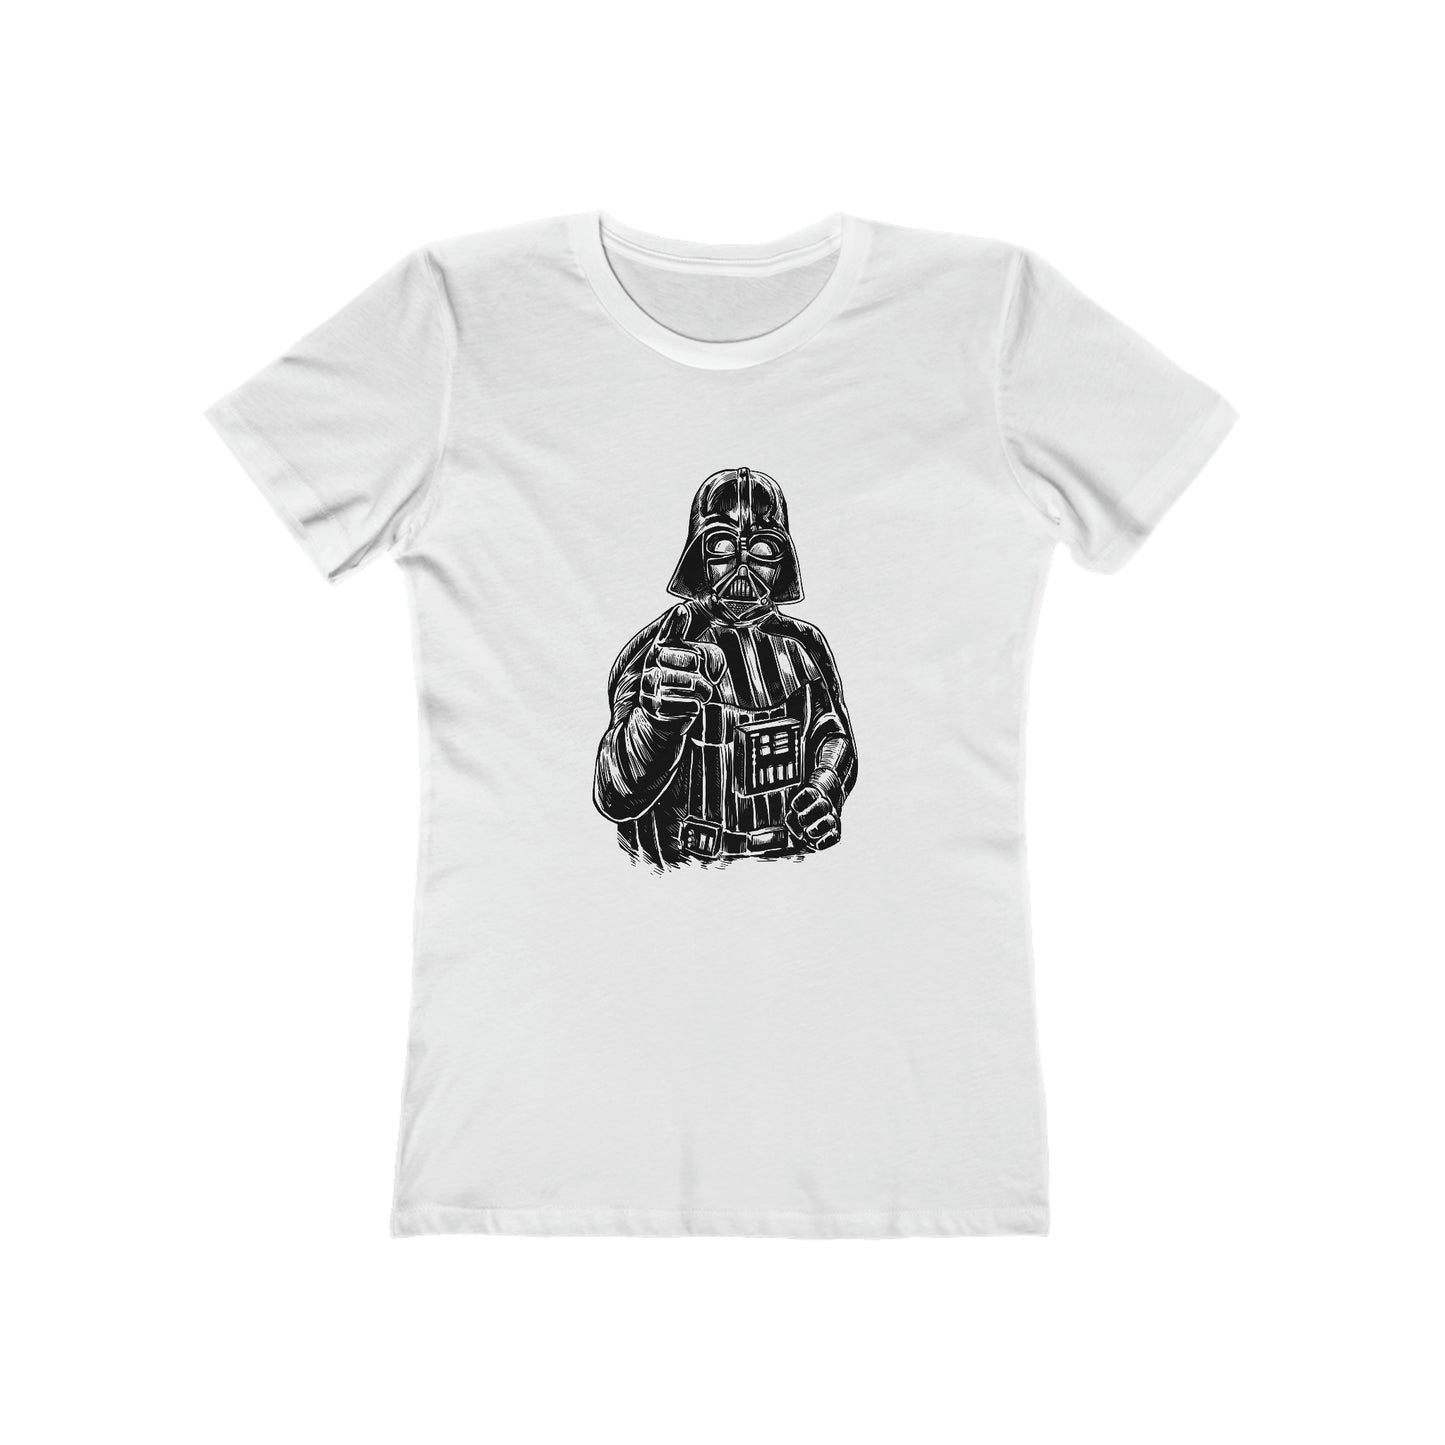 Darth Vader Wants You - Women's T-shirt